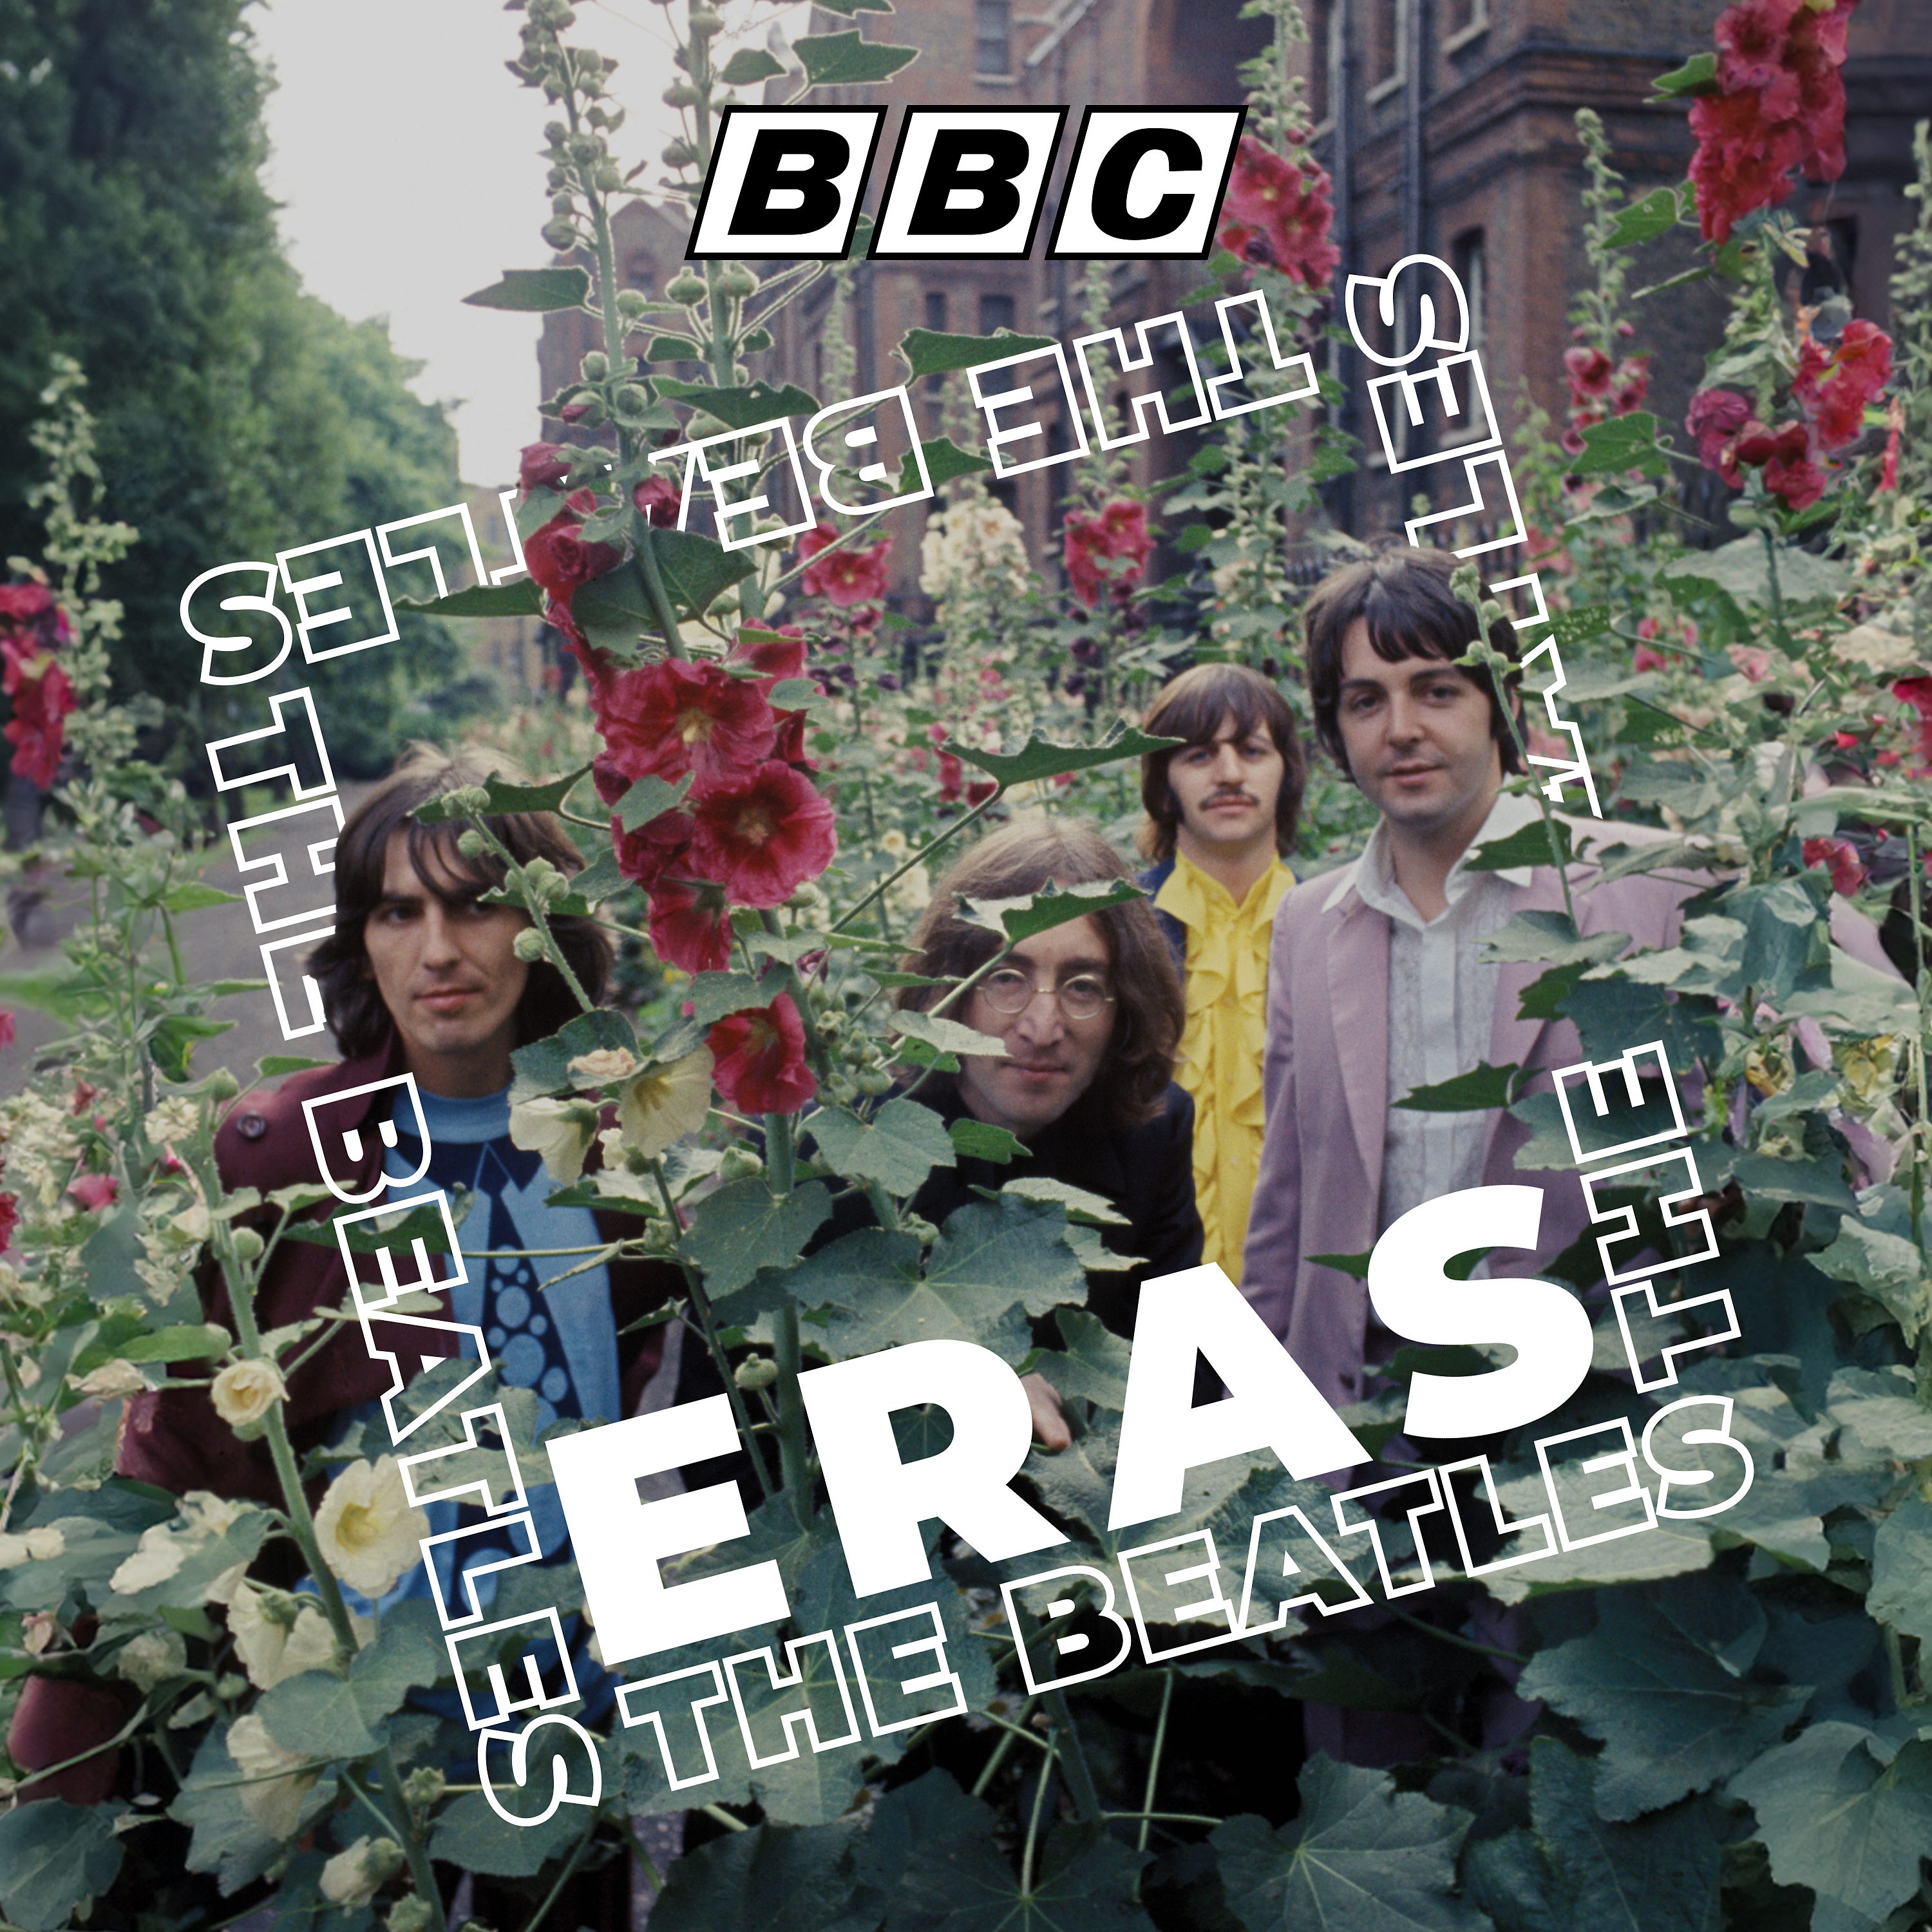 The Beatles: 4. Revolution